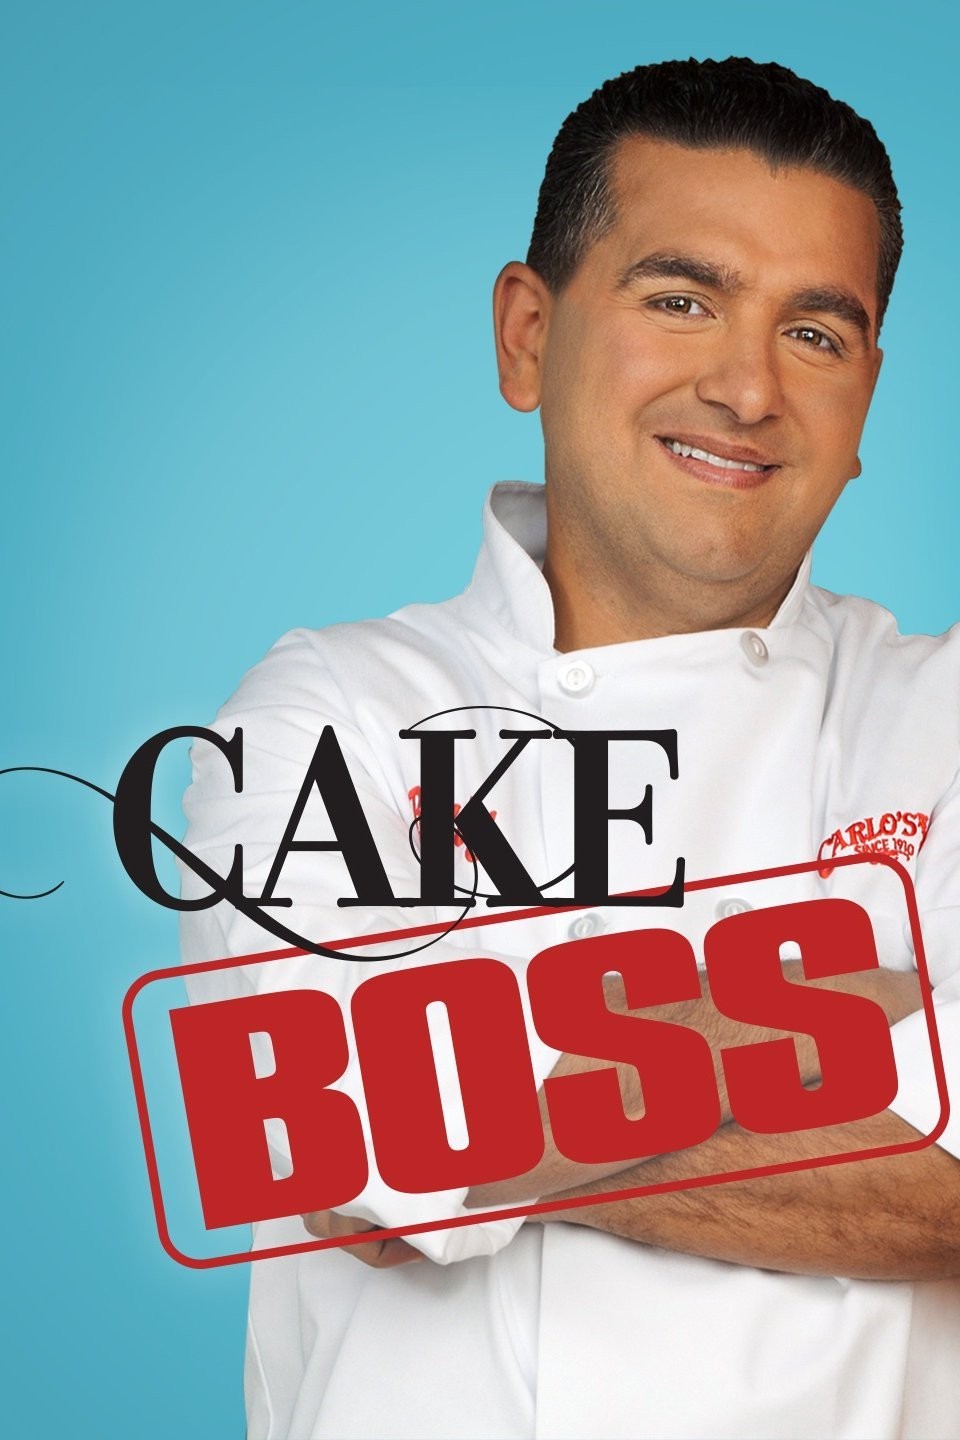 Cake Boss: Next Great Baker Season 3 Episodes Streaming Online | Free Trial  | The Roku Channel | Roku